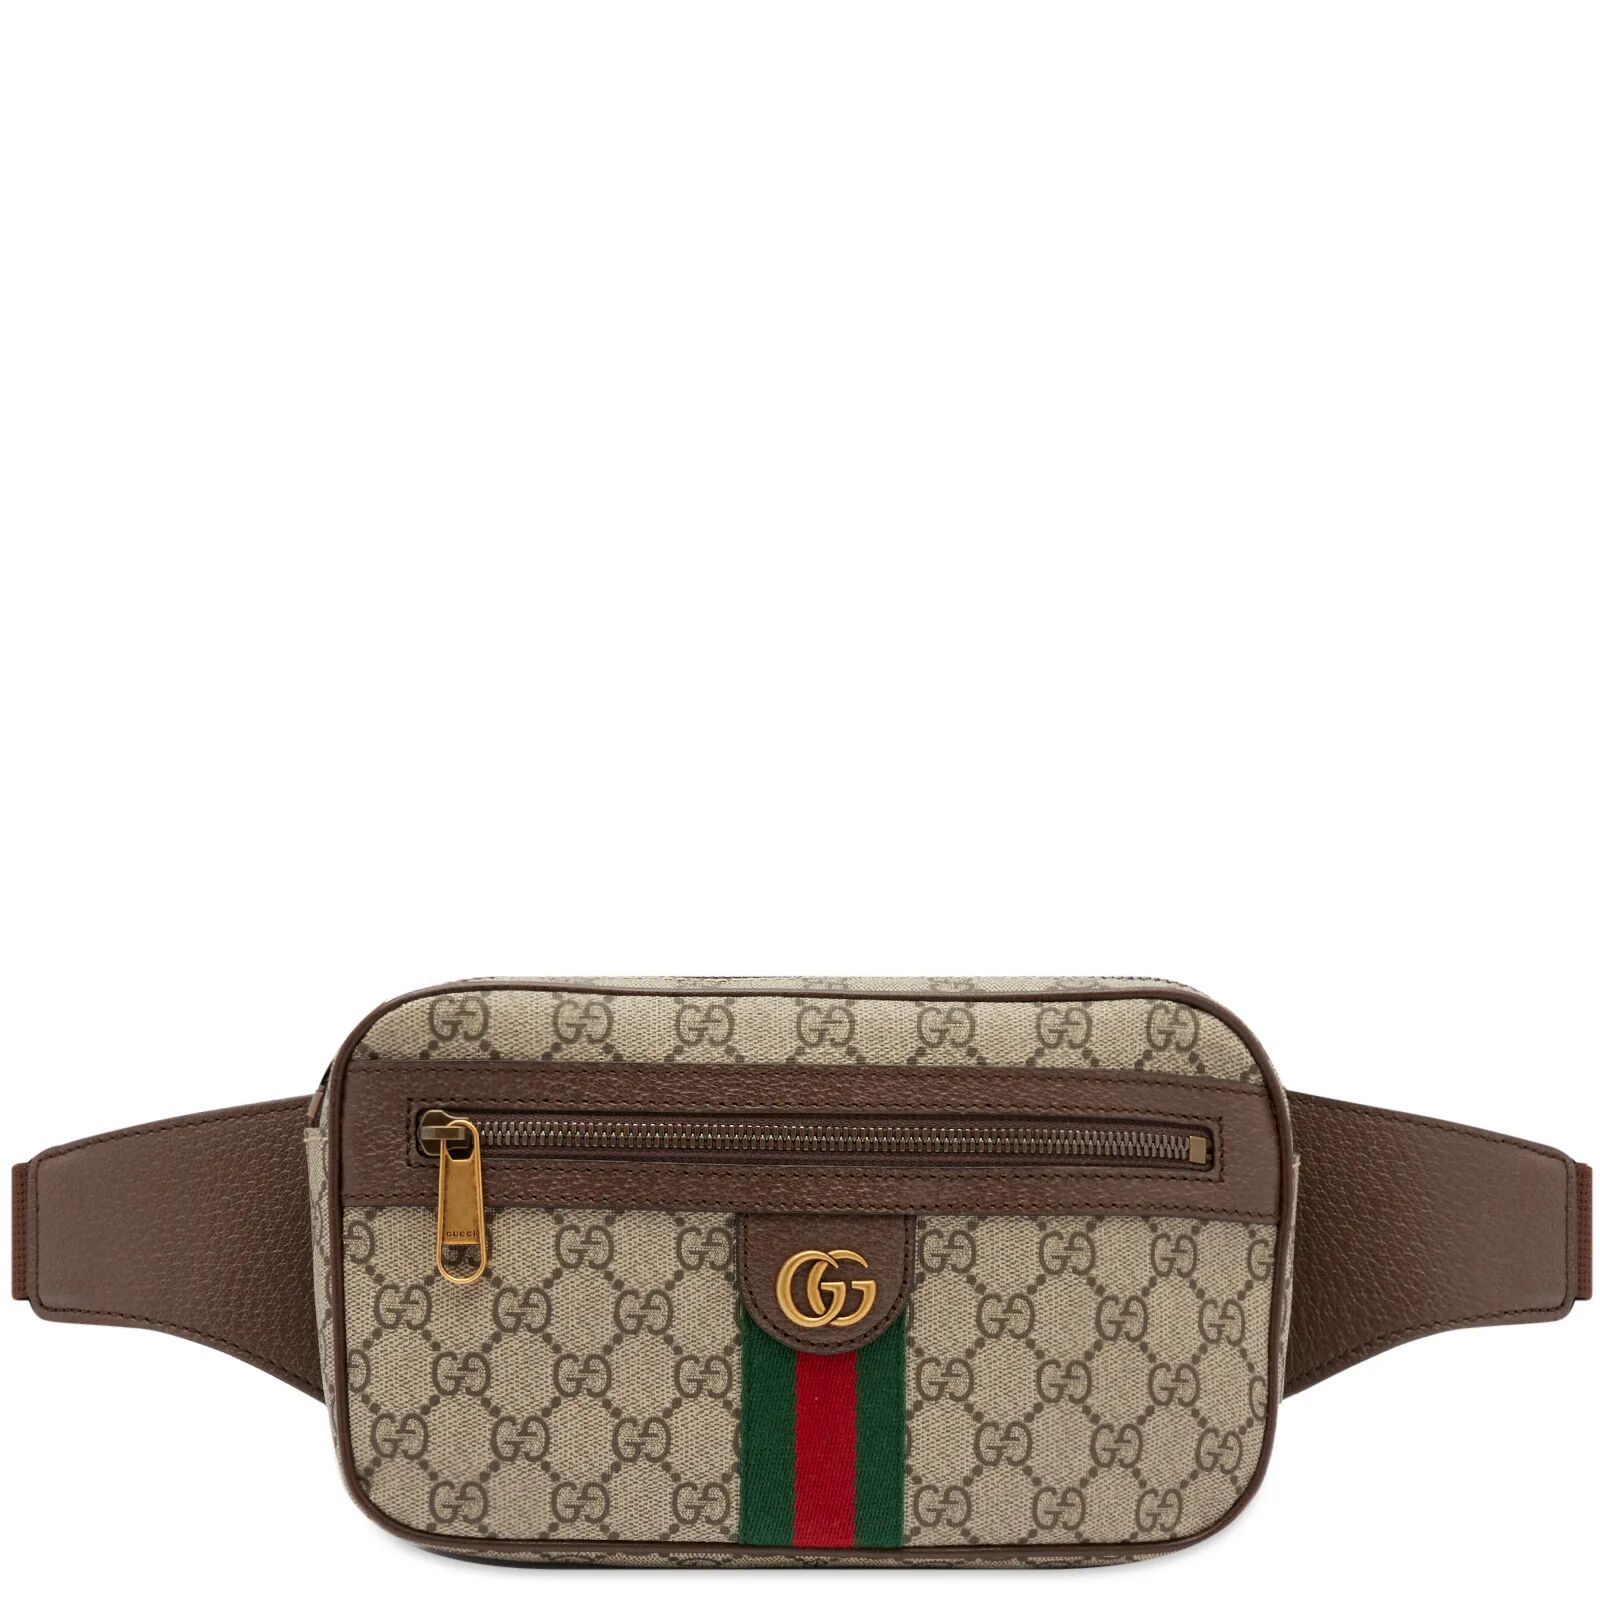 Gucci Men's Ophidia GG Monogram Waist Bag in Beige, Size Medium